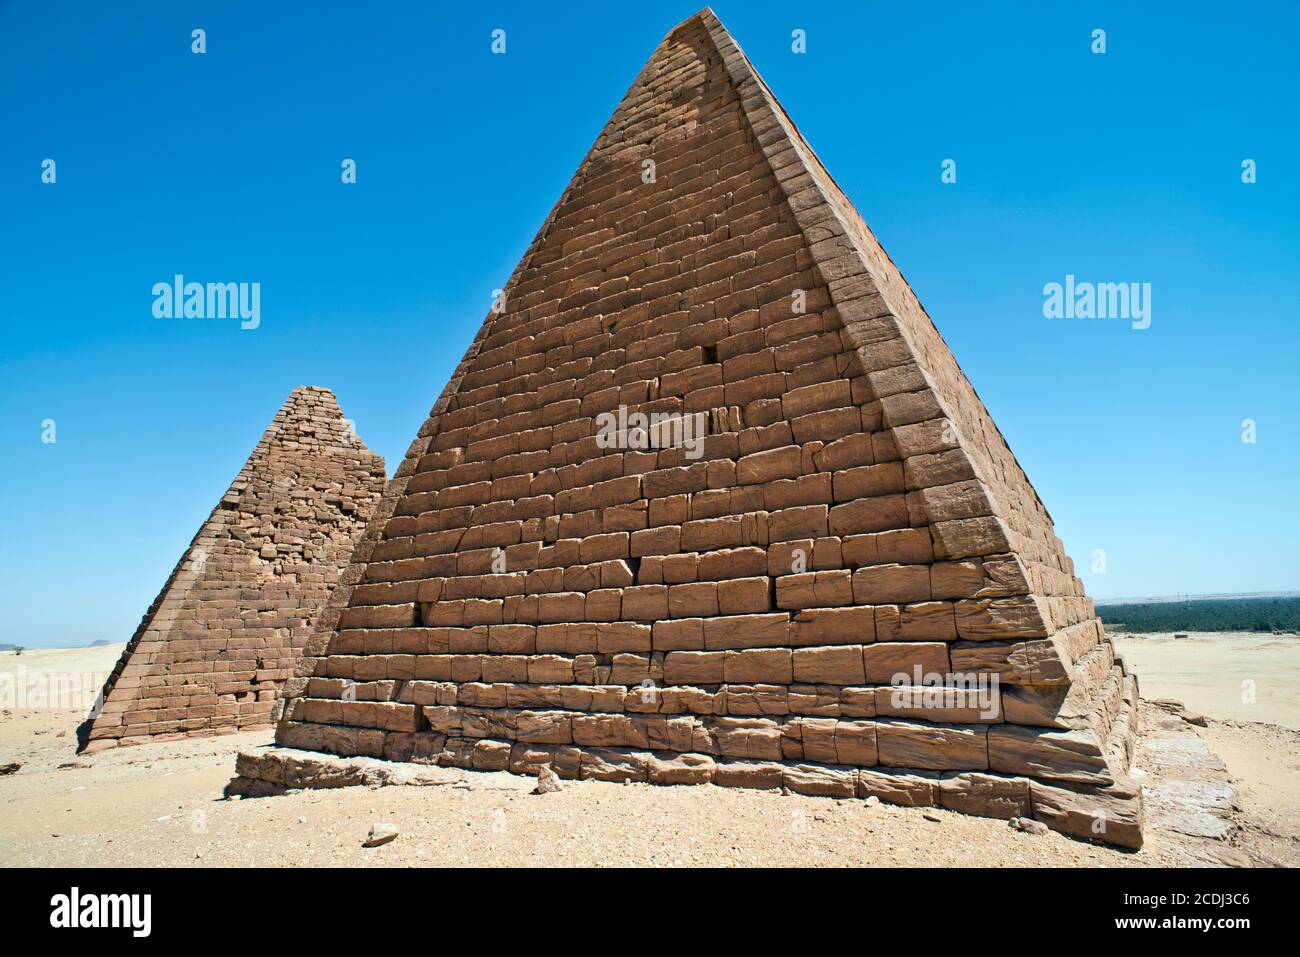 Kush Empire pyramids at Jebel Barkal, Sudan Stock Photo